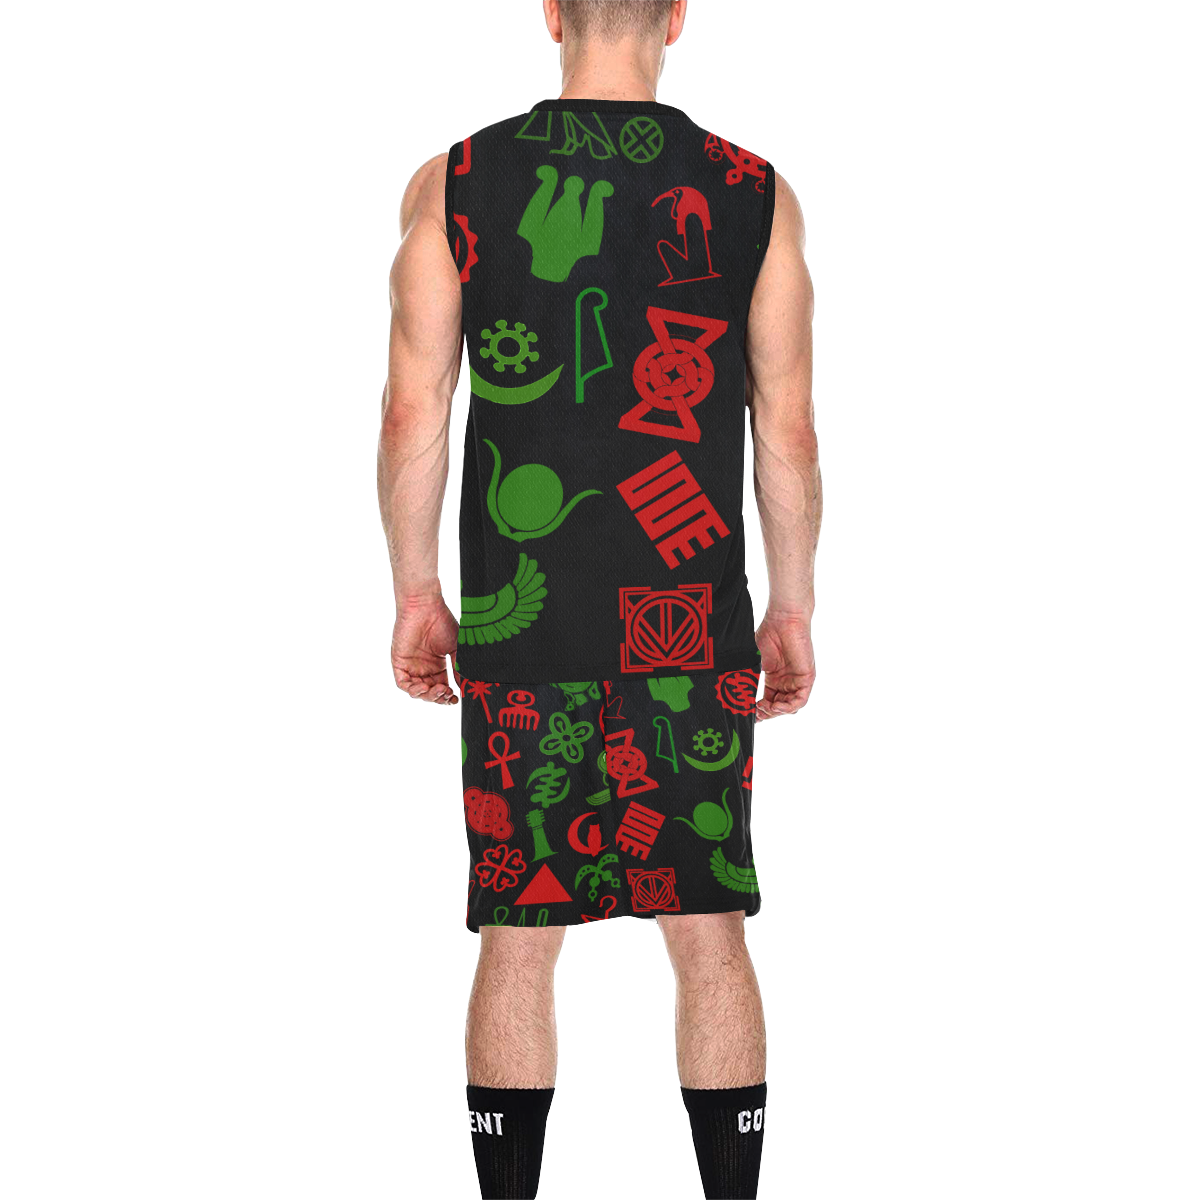 LCC KMT WORLD All Over Print Basketball Uniform